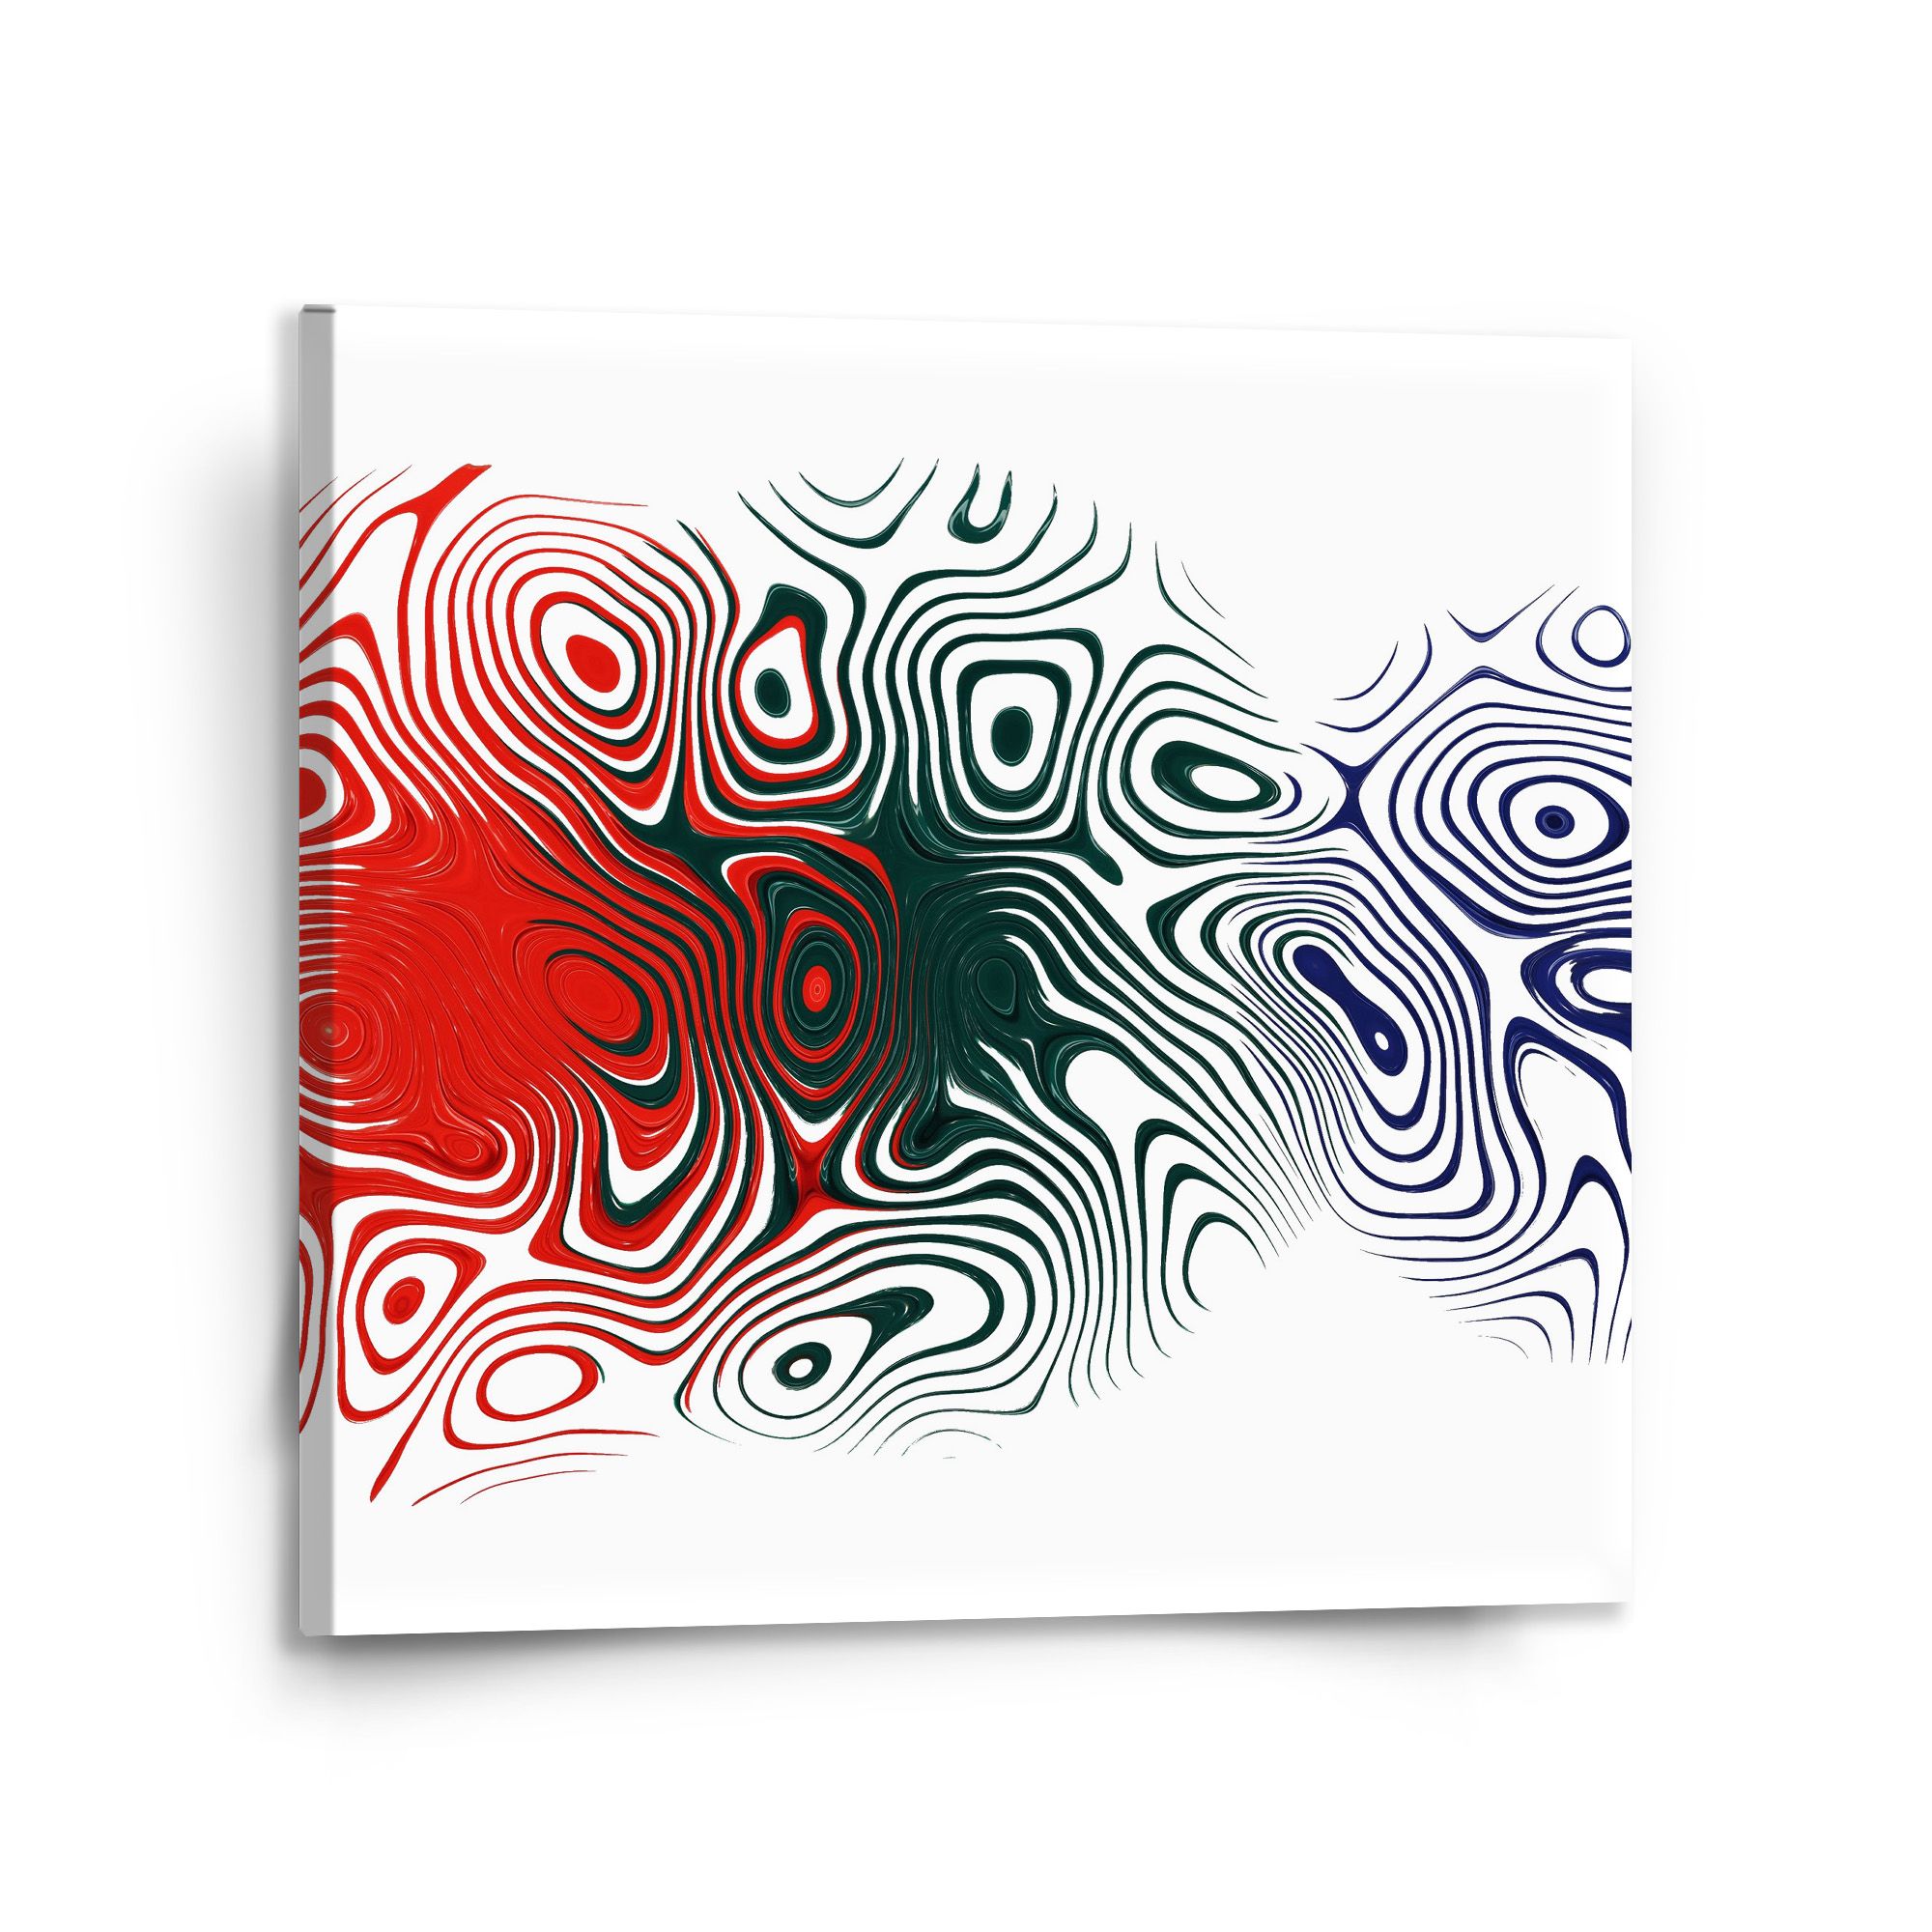 Obraz SABLIO - Dvoubarevná abstrakce 110x110 cm - E-shop Sablo s.r.o.